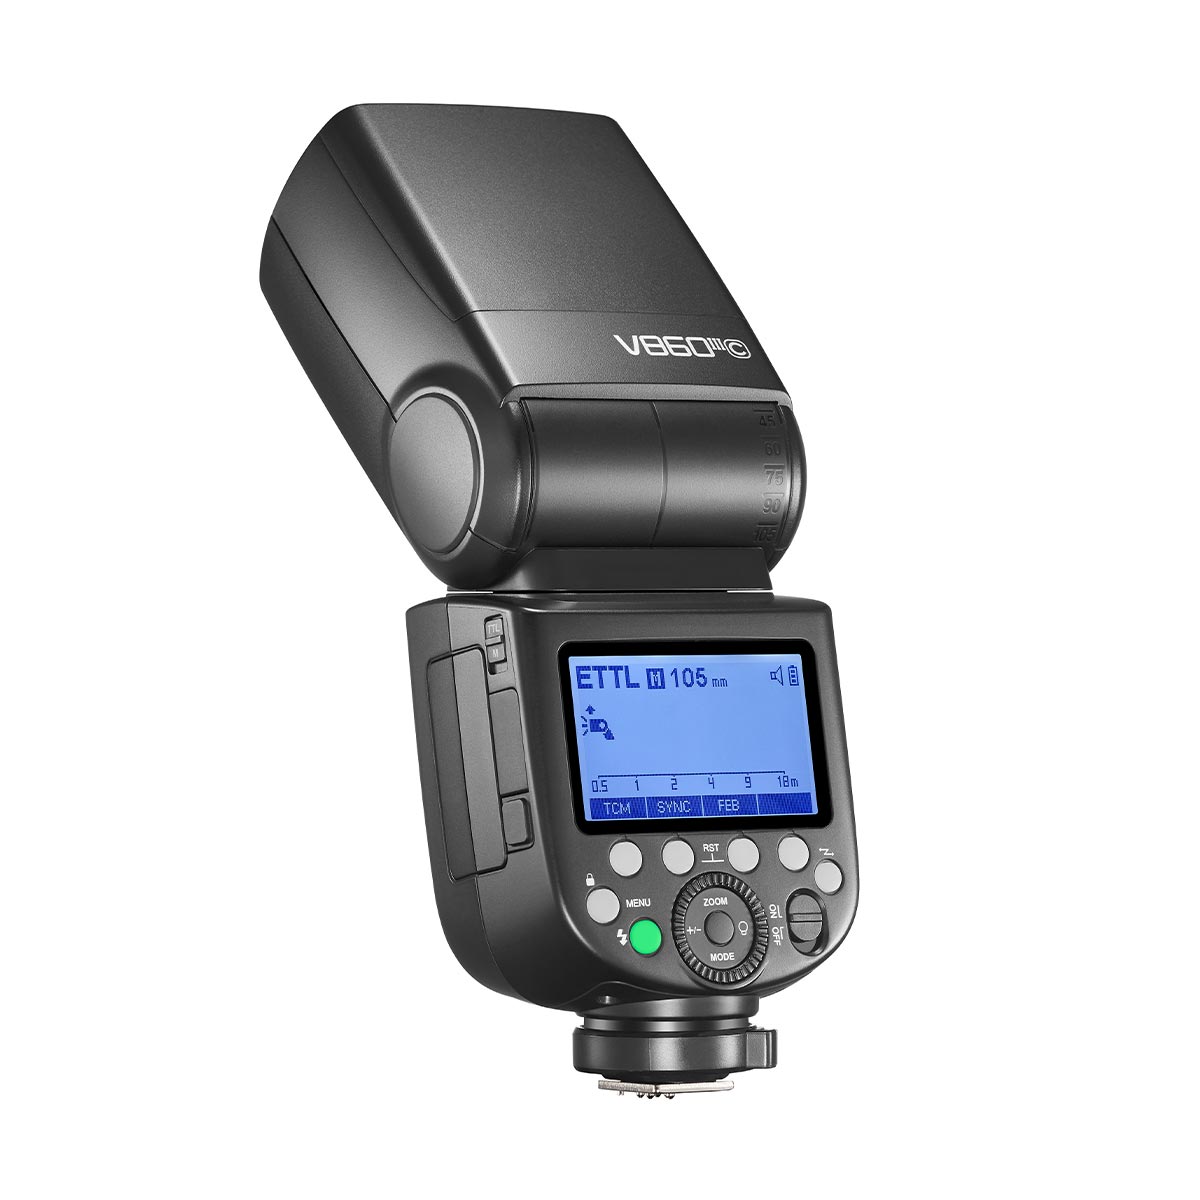 Godox VING V860IIIC TTL Li-Ion Flash Kit for Canon